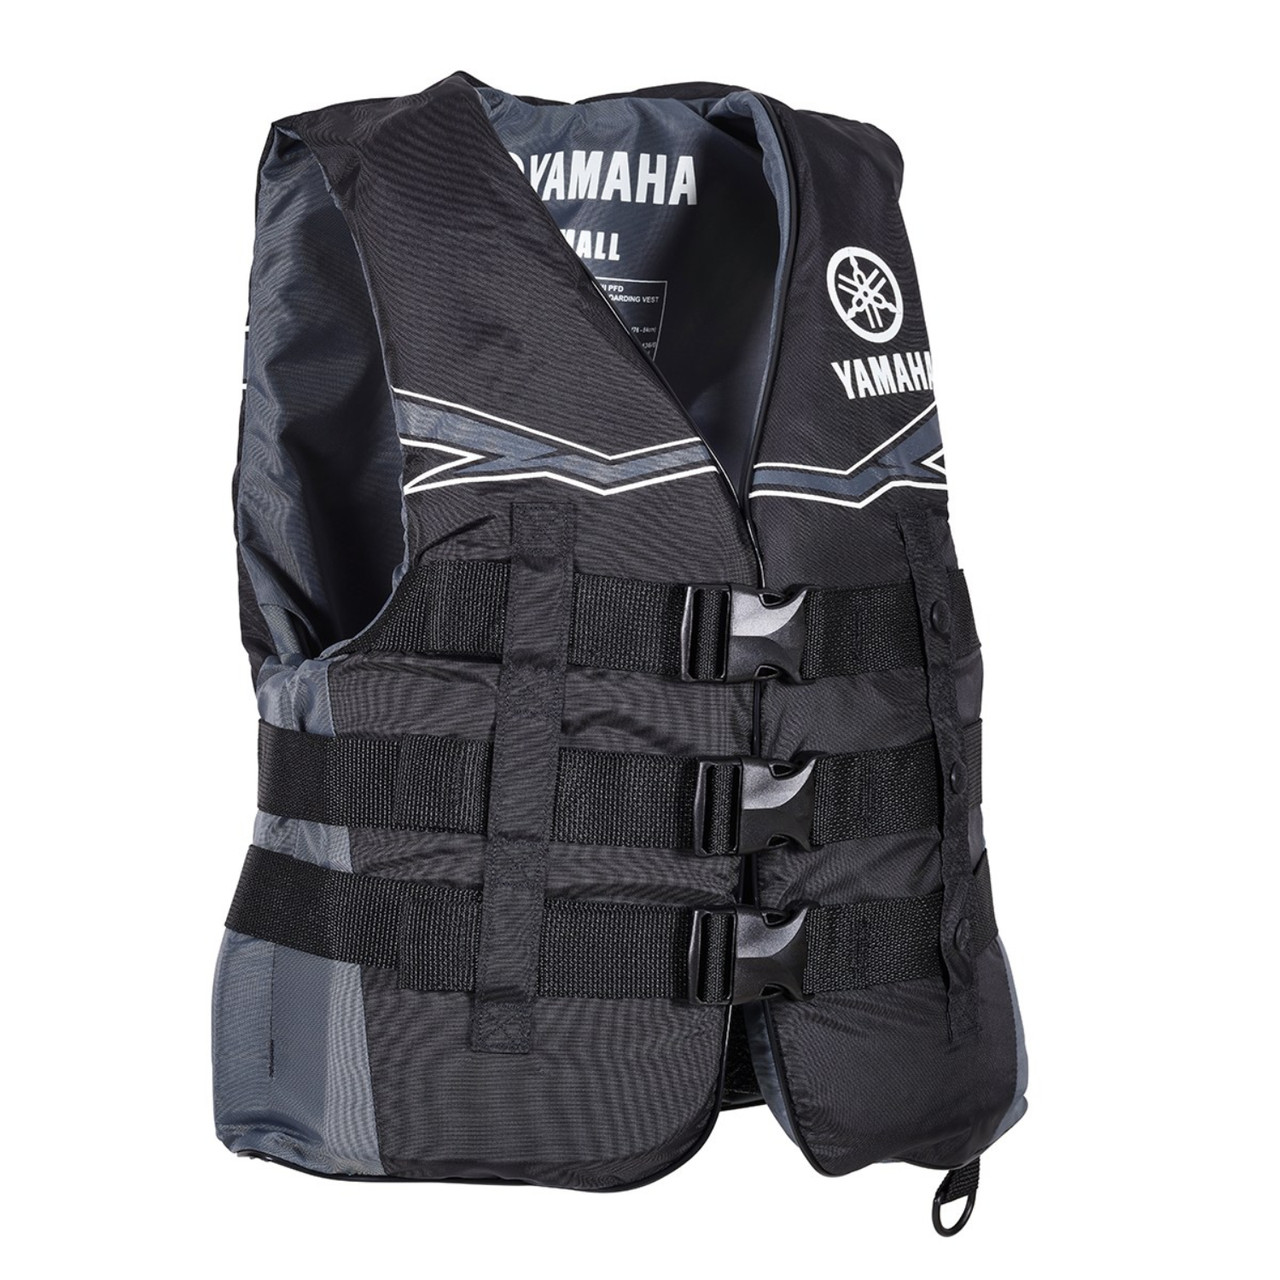 Yamaha New OEM Adult Men's MD Black Nylon Life Jacket/PFD MAR-21V3B-BK-MD